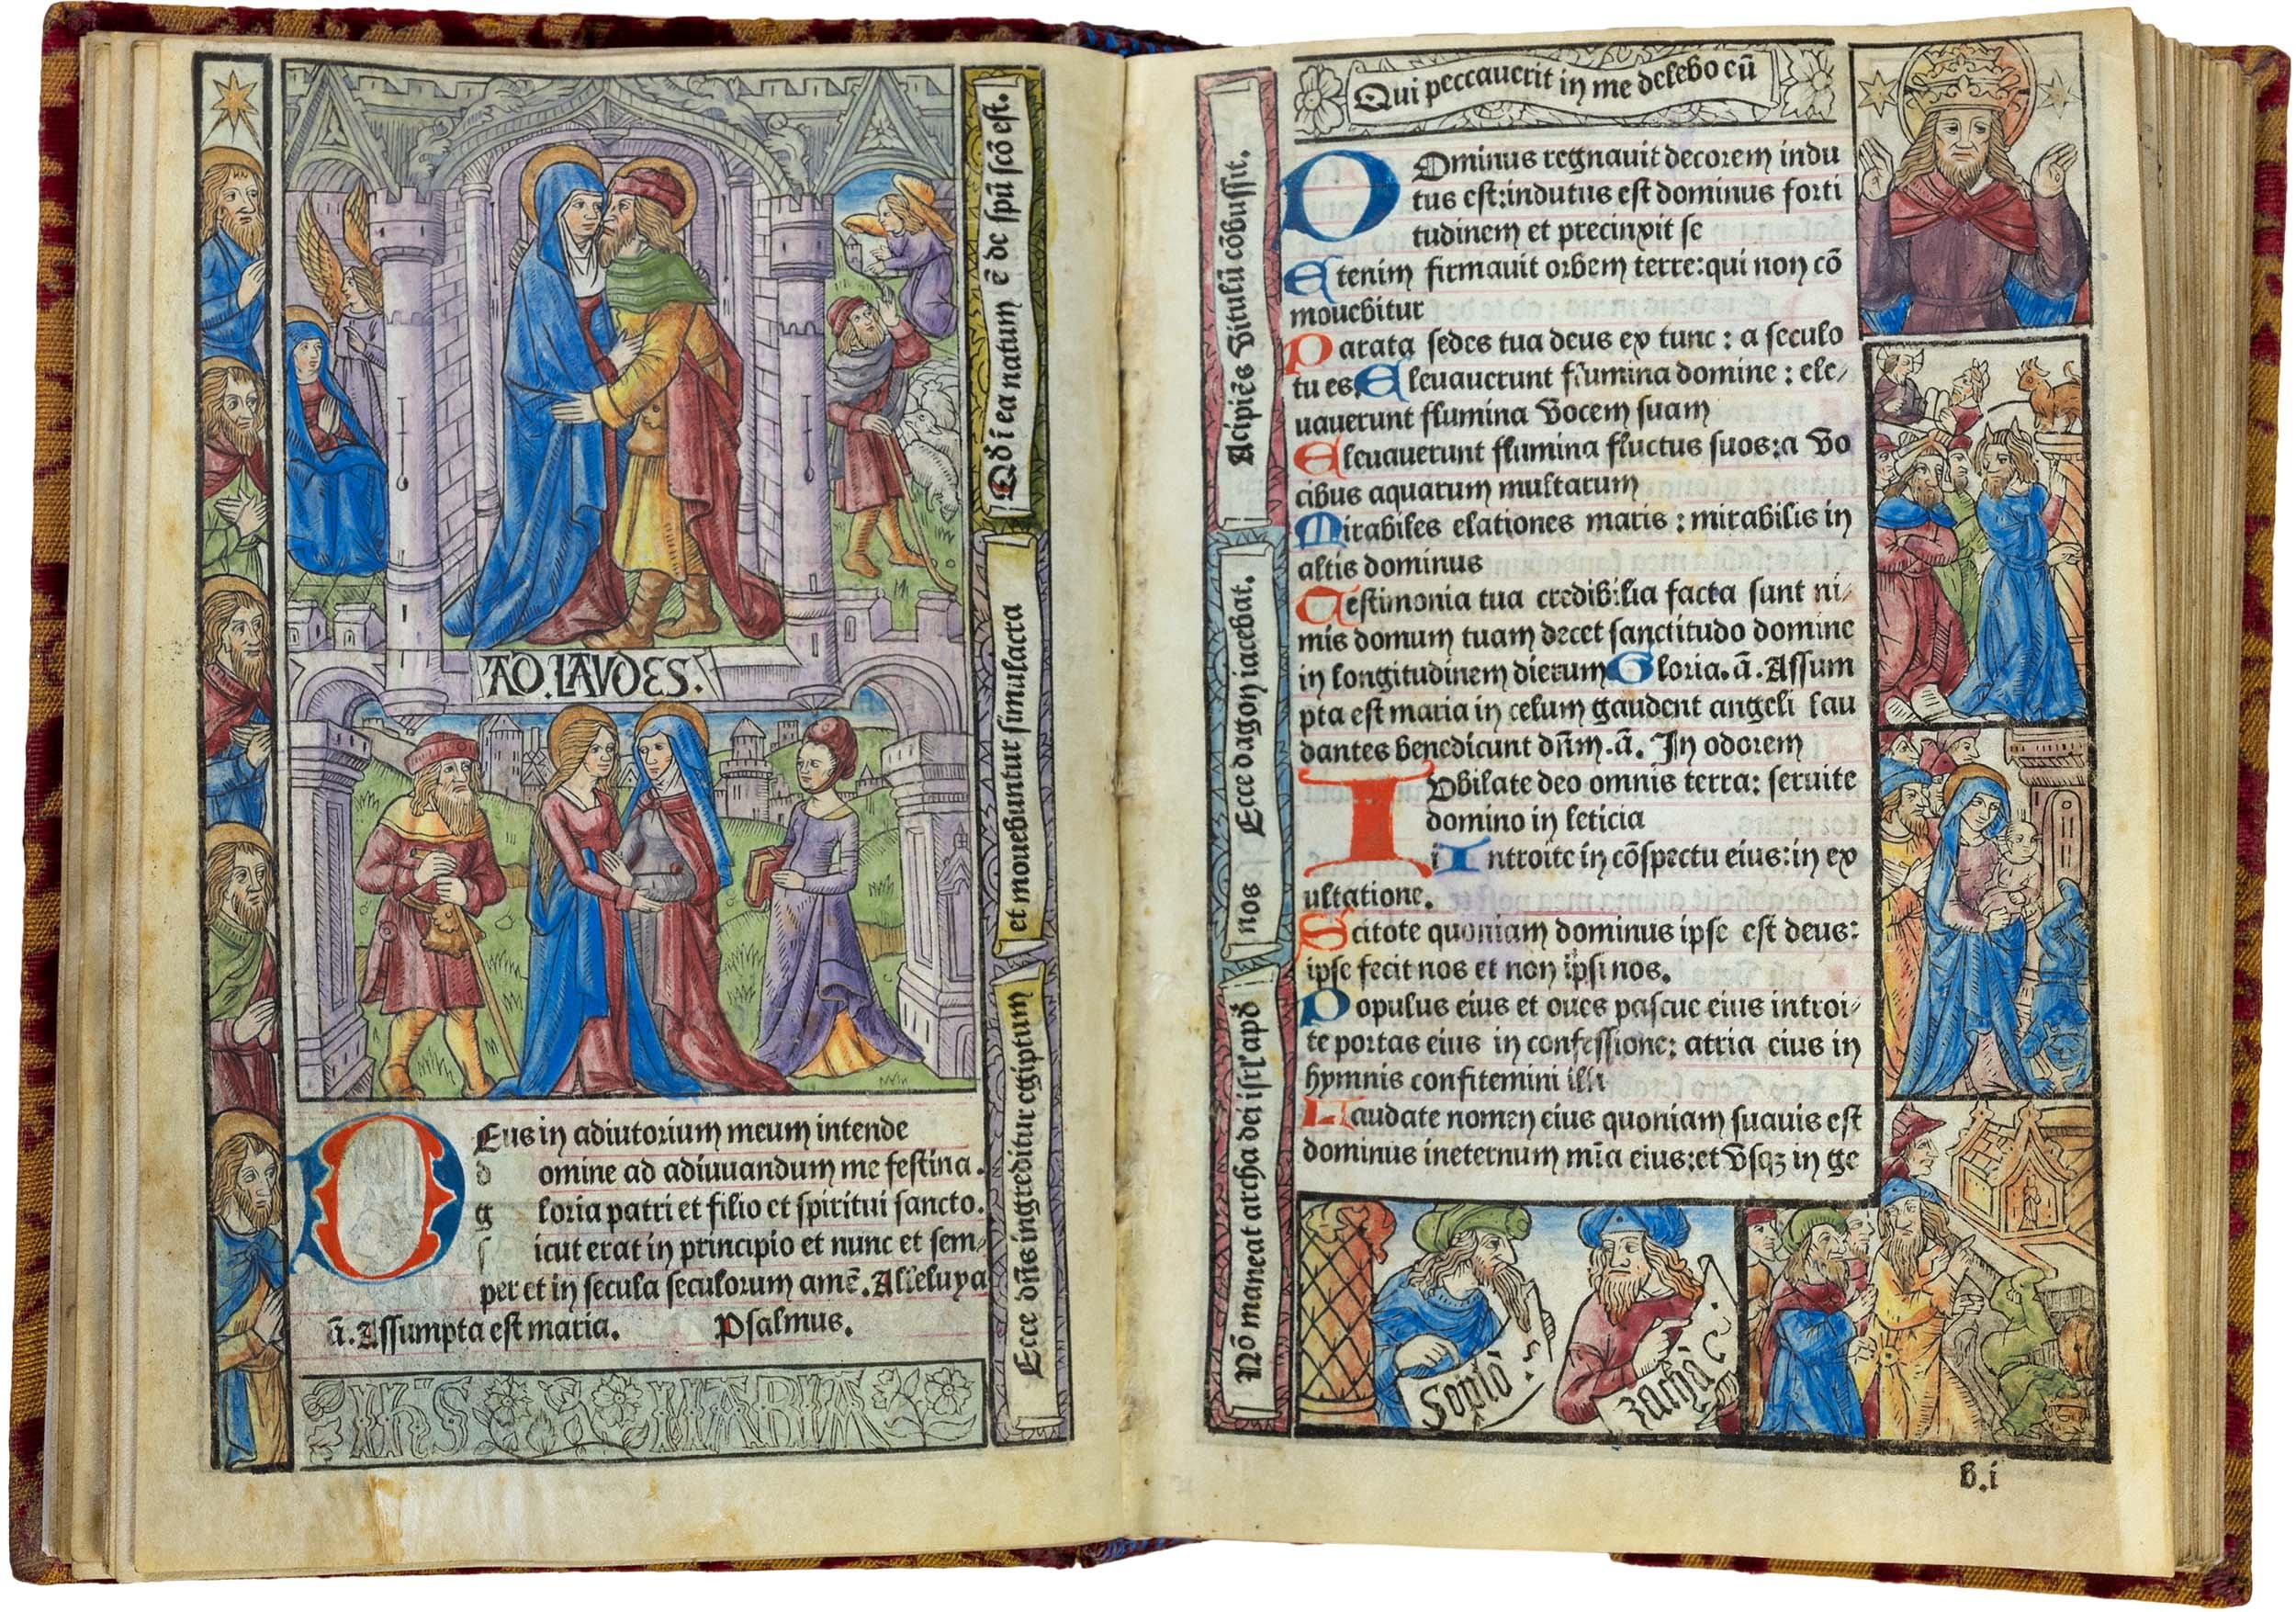 horae-bmv-8.10.1488-dupre-verard-printed-book-of-hours-illuminated-vellum-copy-king-charles-viii-23.jpg